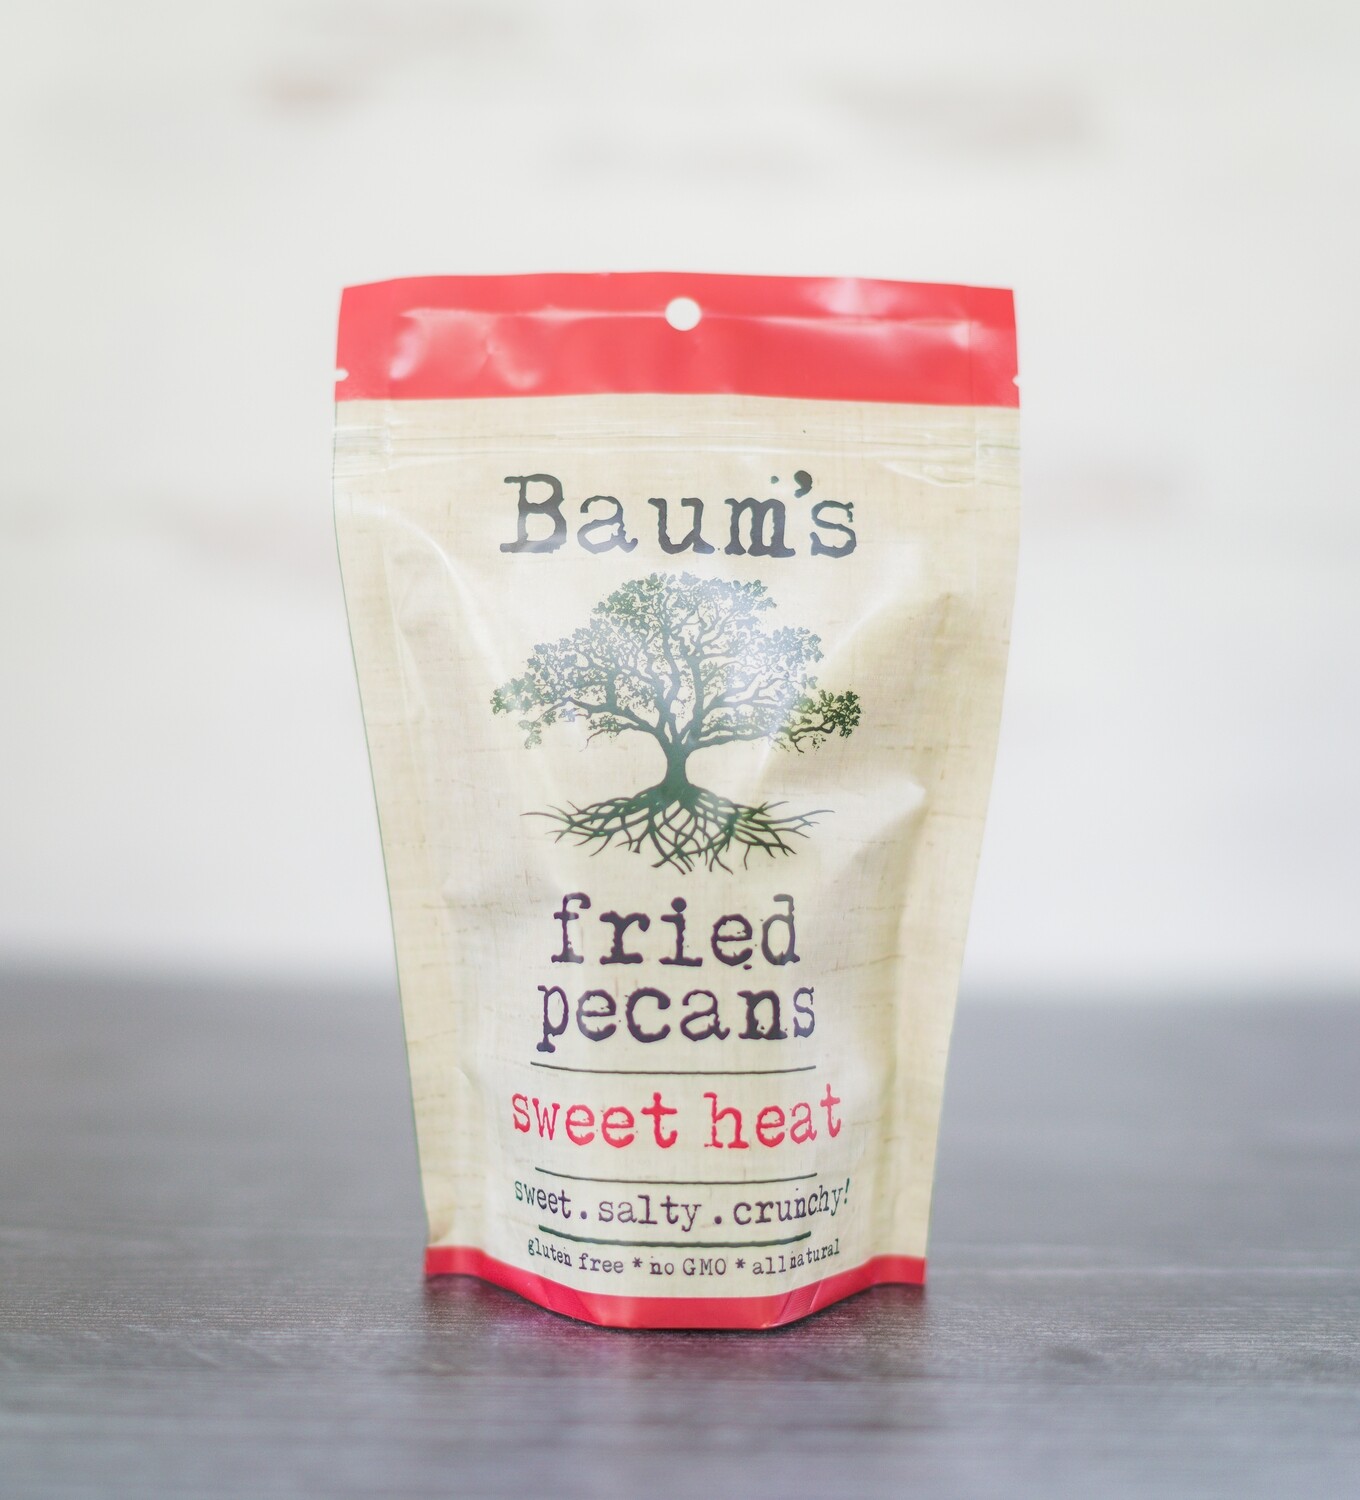 Baum's Fried Pecans "Sweet Heat"